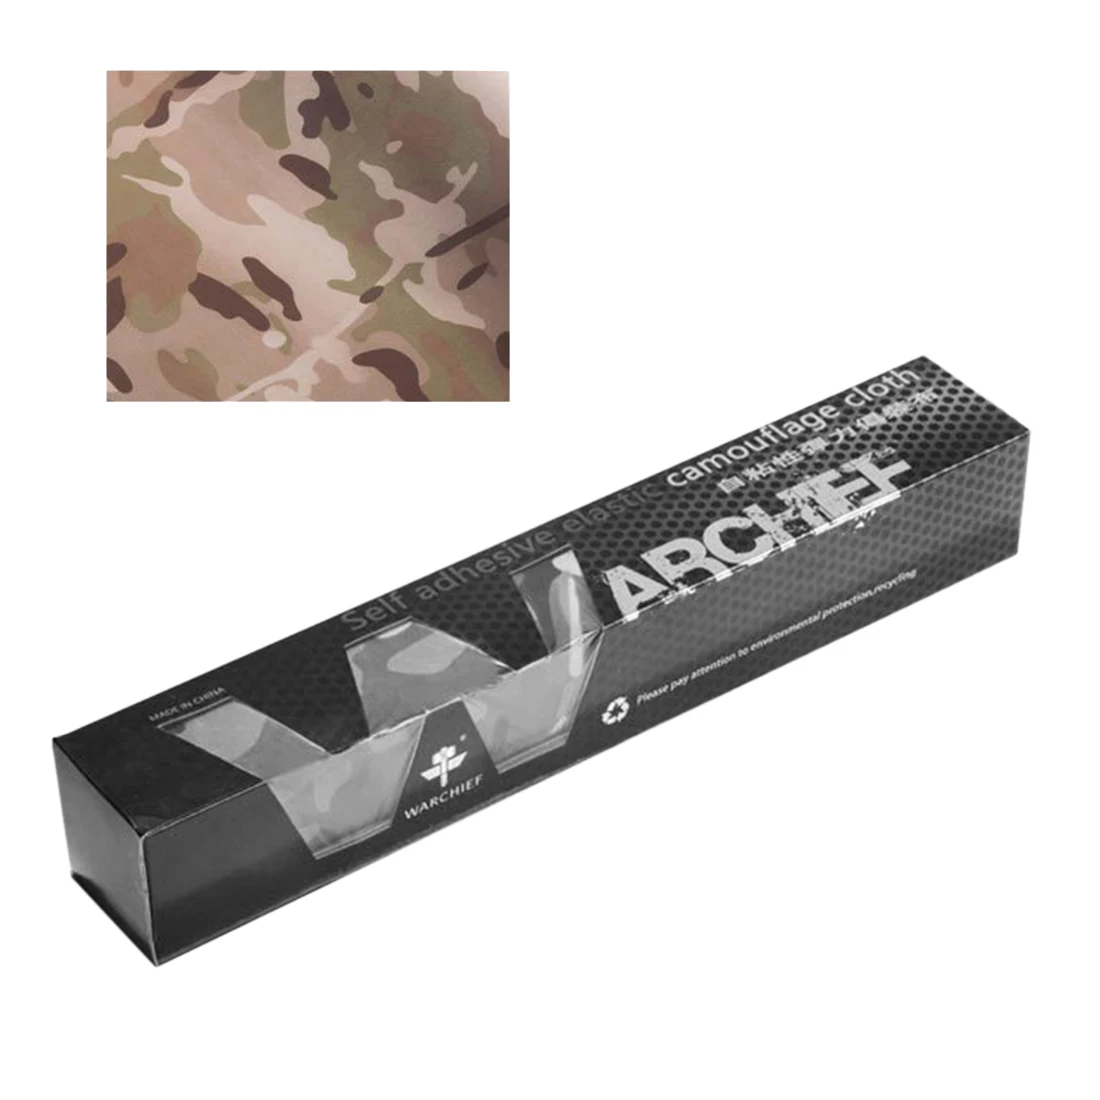 modiker 30 x 150cm DIY Tactical Self Adhesive Elastic Camouflage Cloth Protective Camo Tape- Python Pattern Desert Color - Color: 3